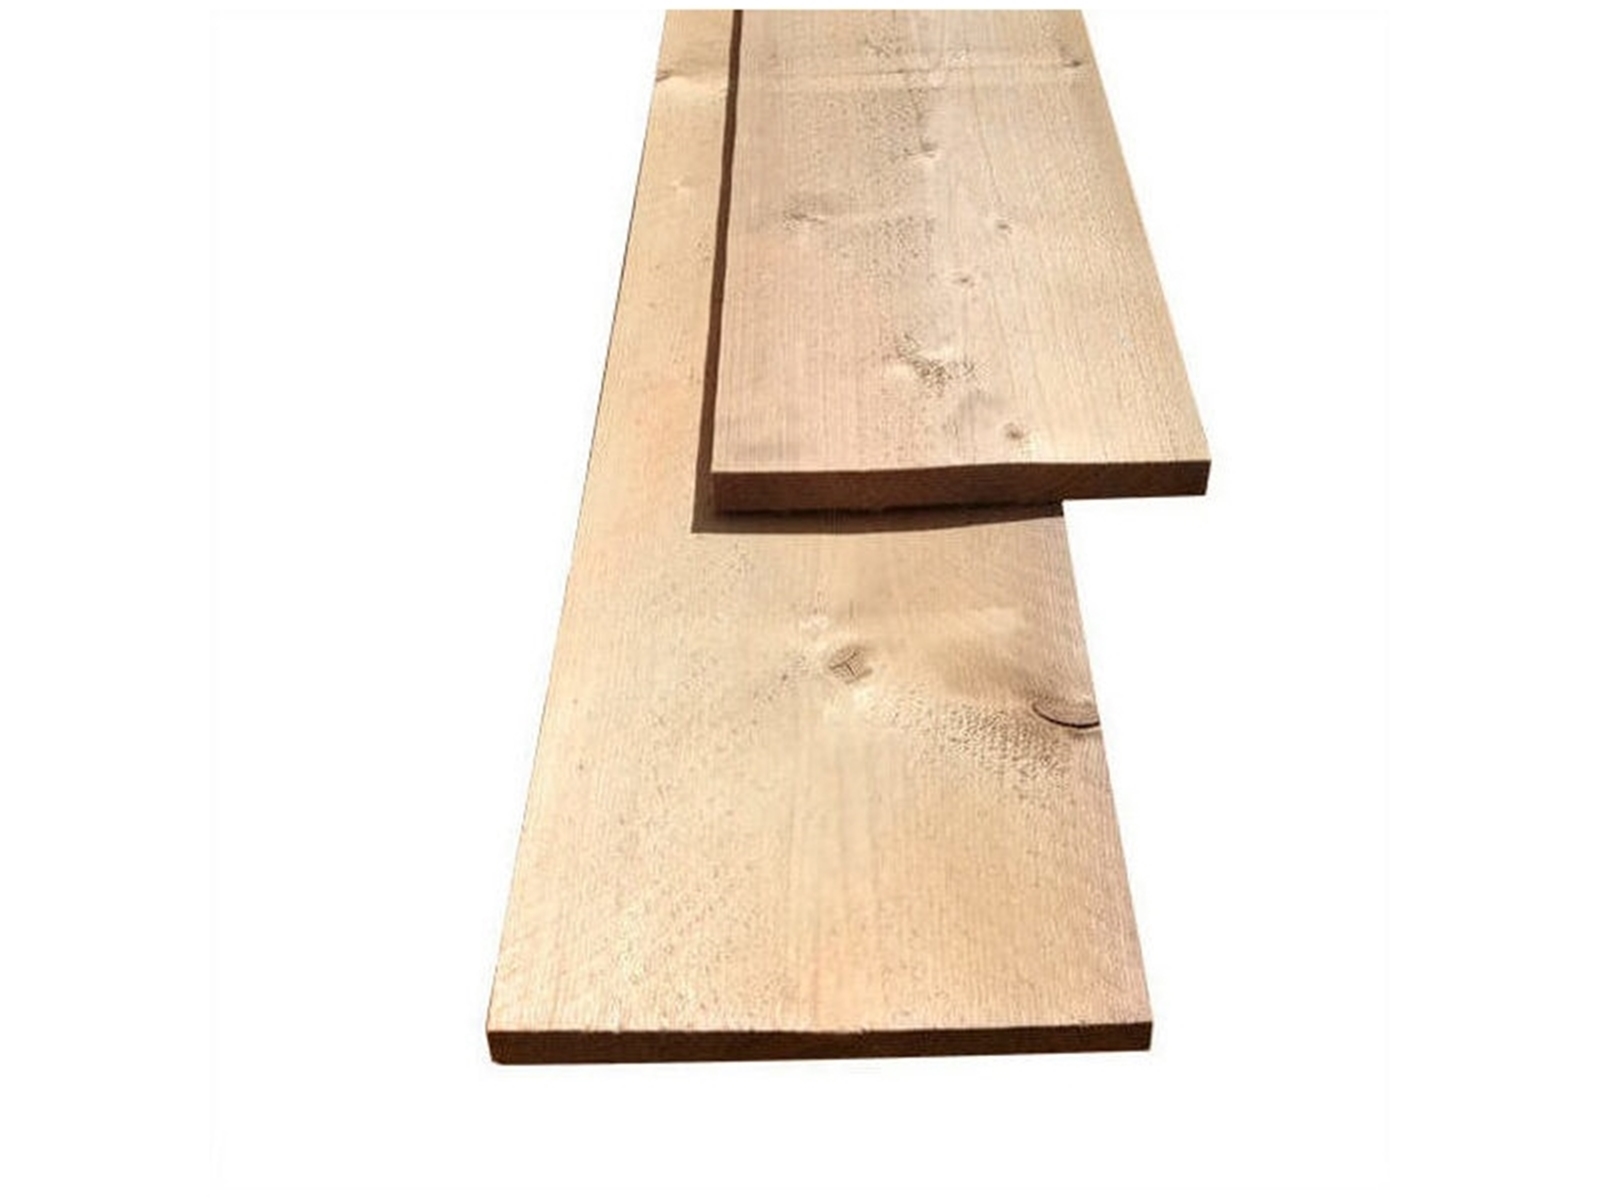 ME-vuren houten plank (bouwplank) ±23x225mm, fijnbezaagd, onbehandeld, 5000mm